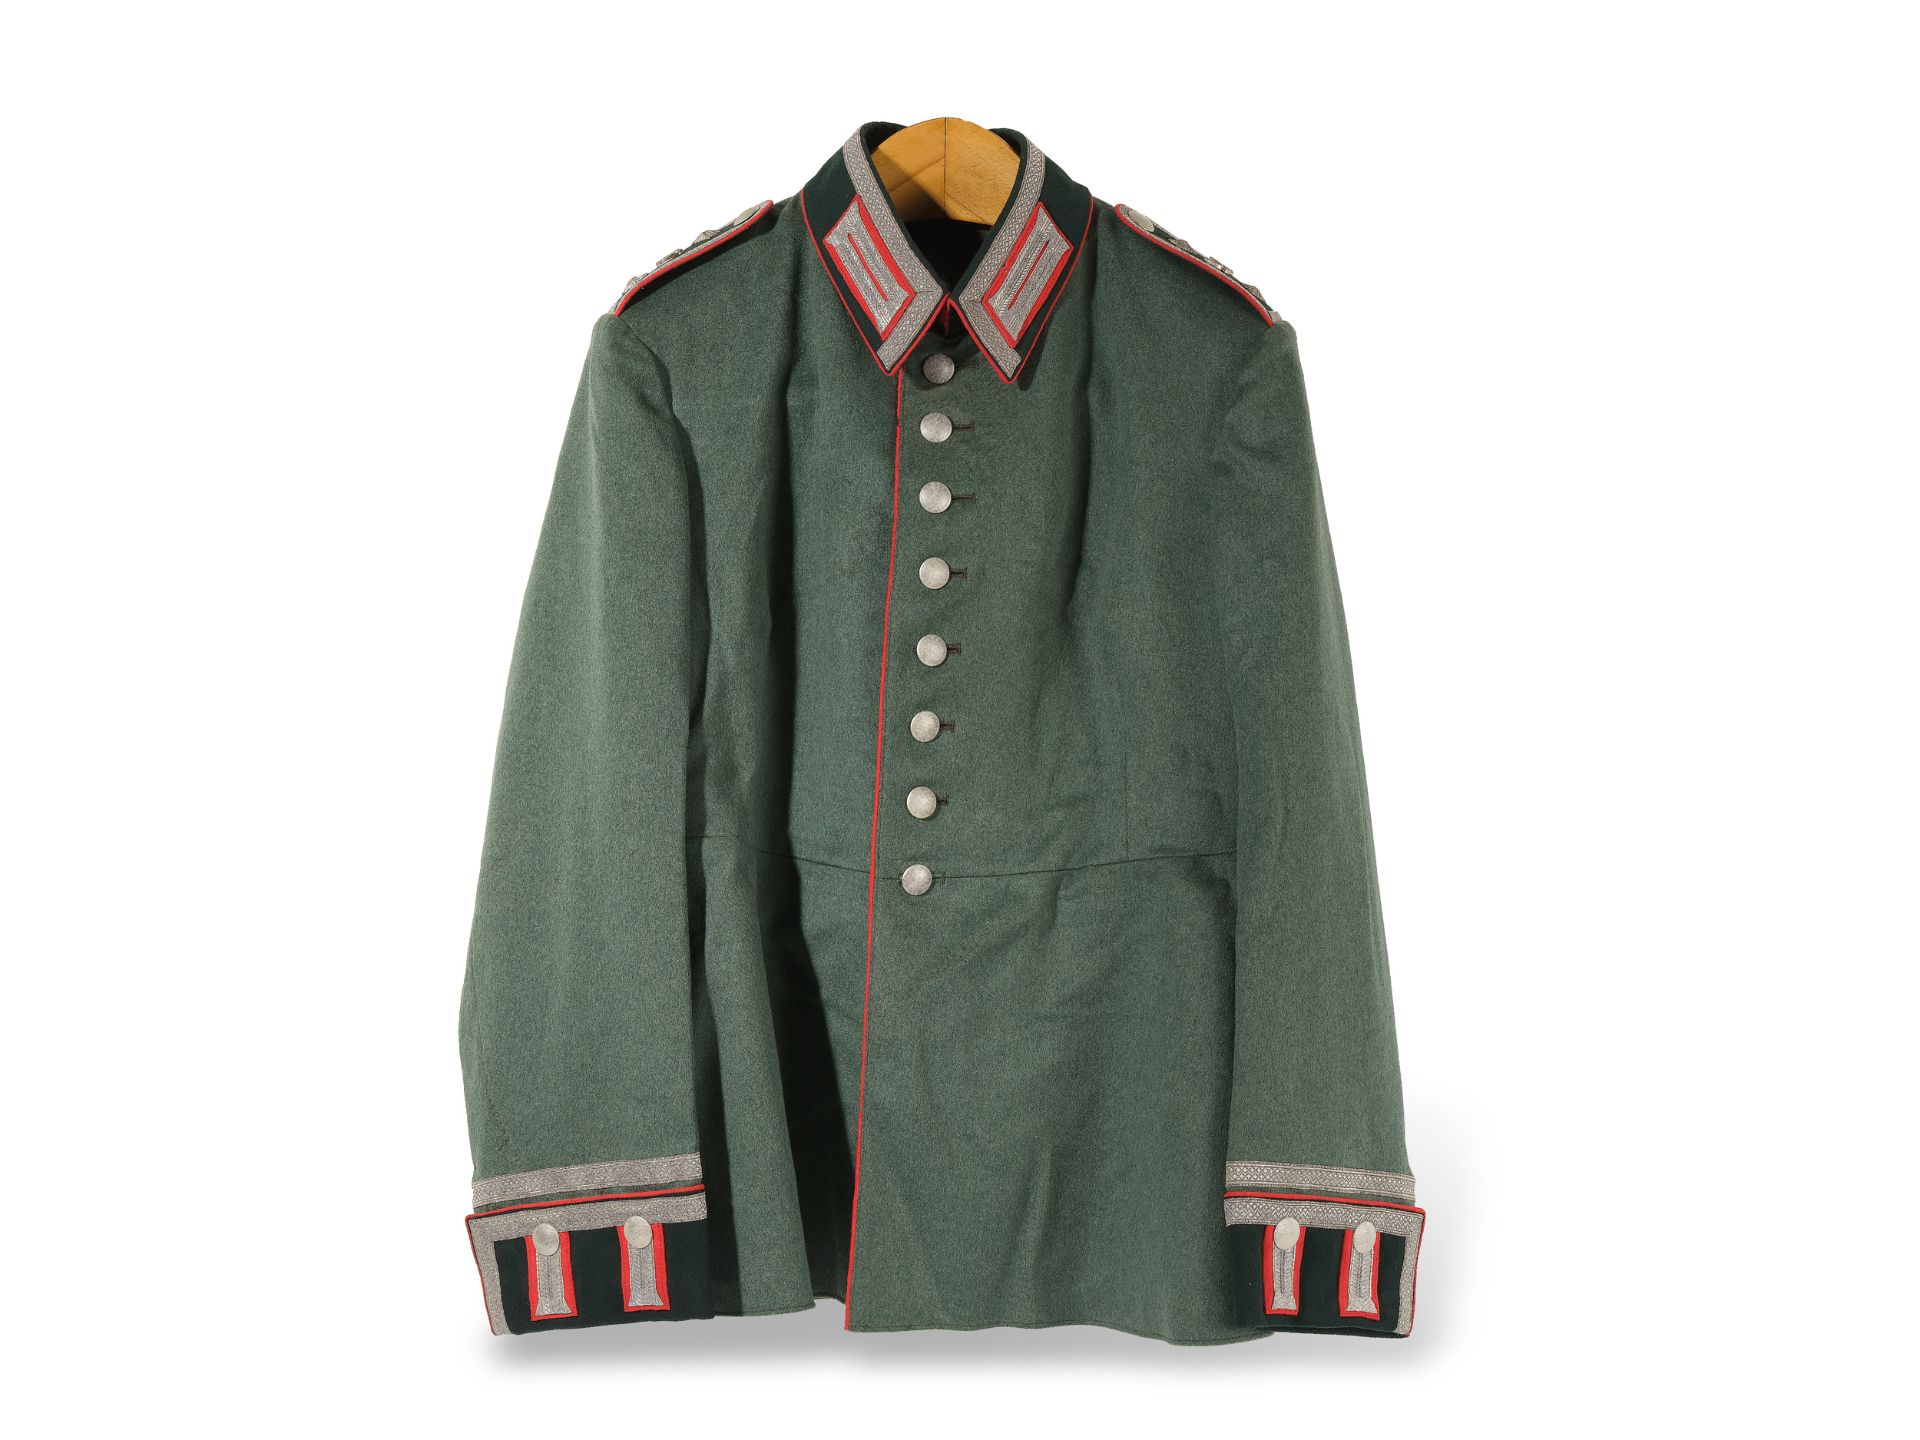 Uniform jacket, 
Germany, 
After 1920